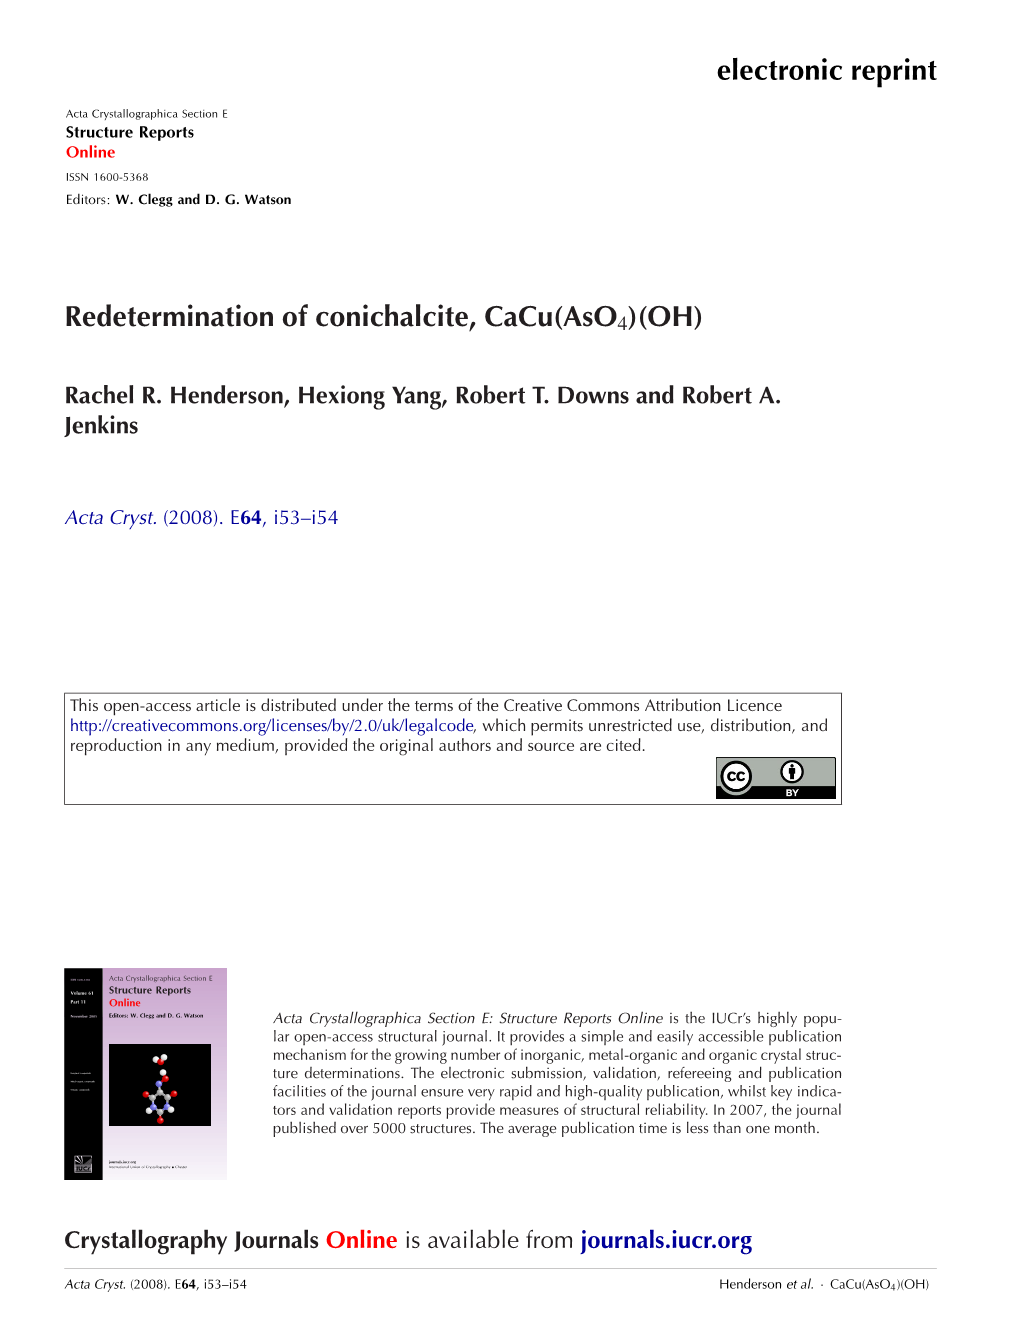 Electronic Reprint Redetermination of Conichalcite, Cacu